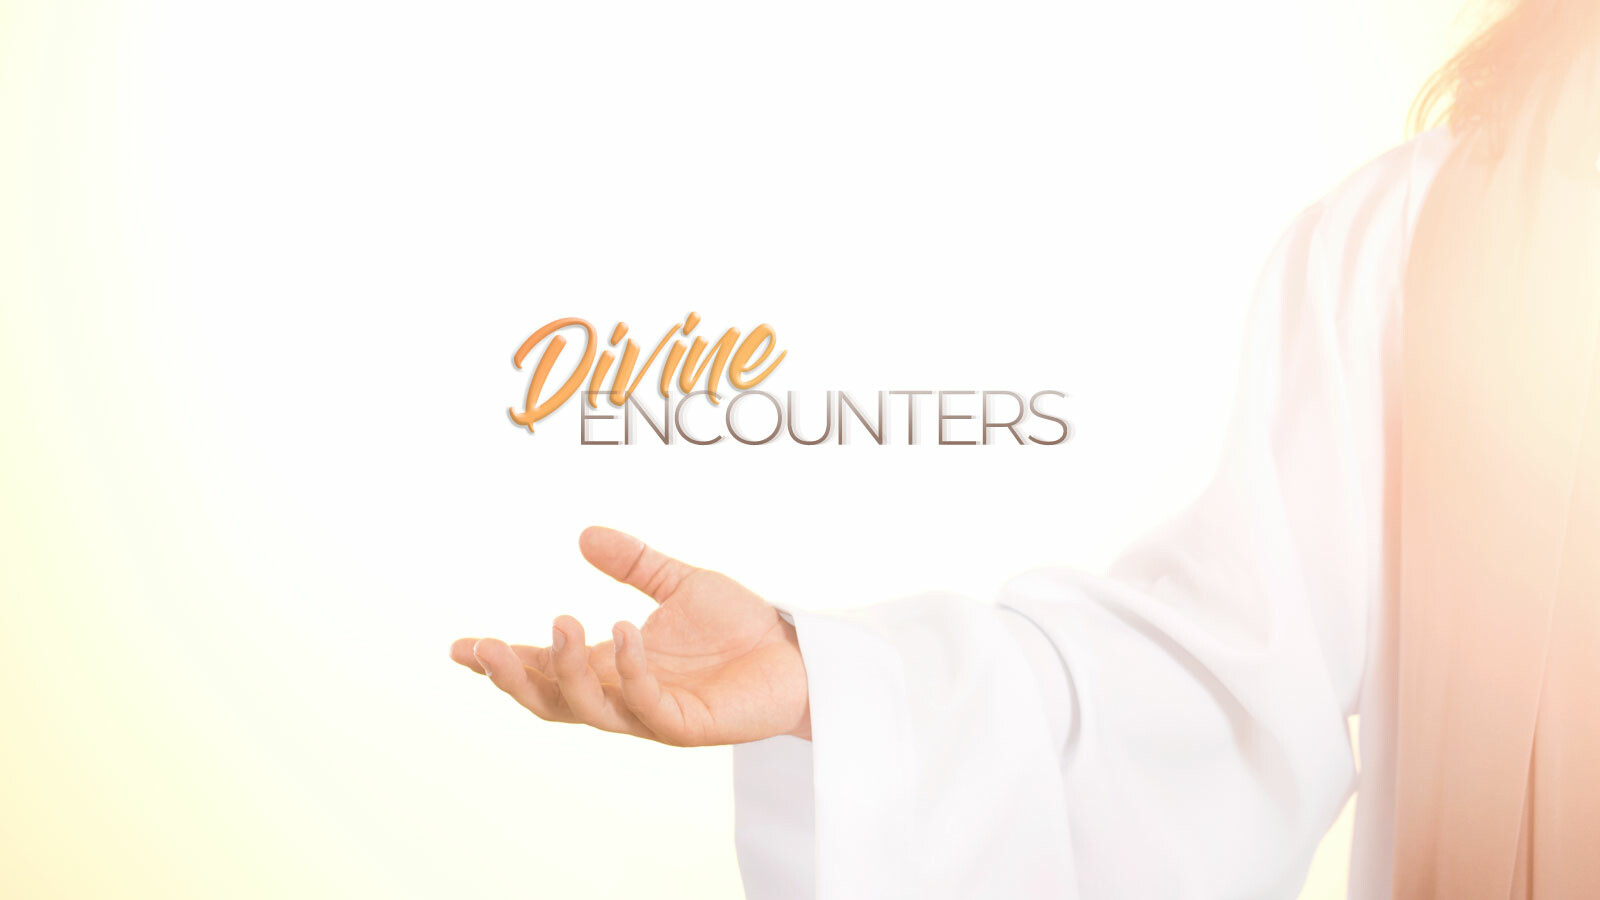 Divine Encounters